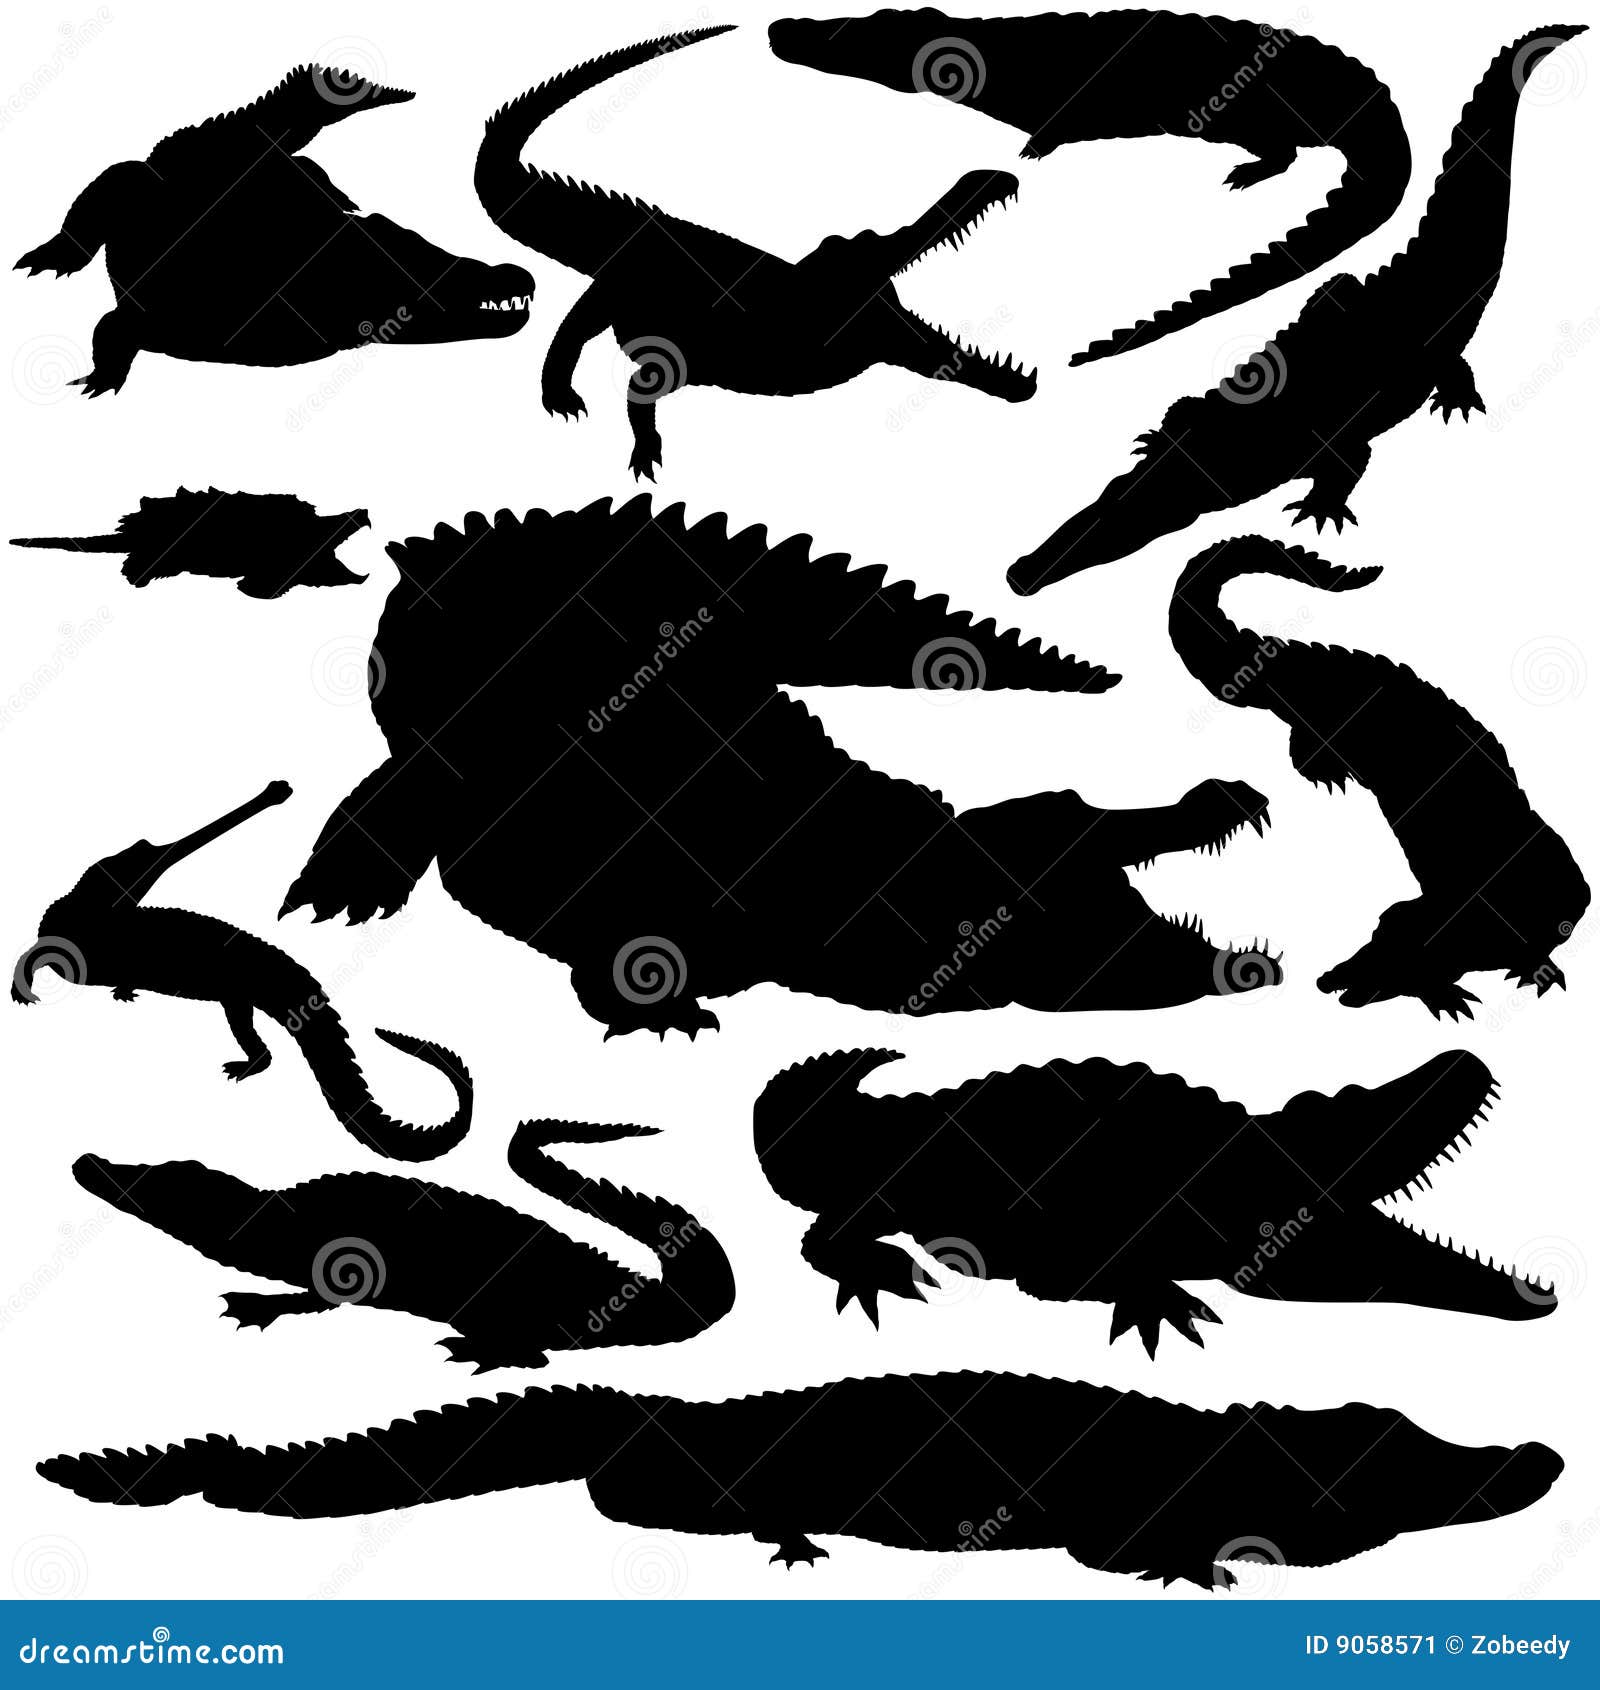 detailed al crocodile silhouettes